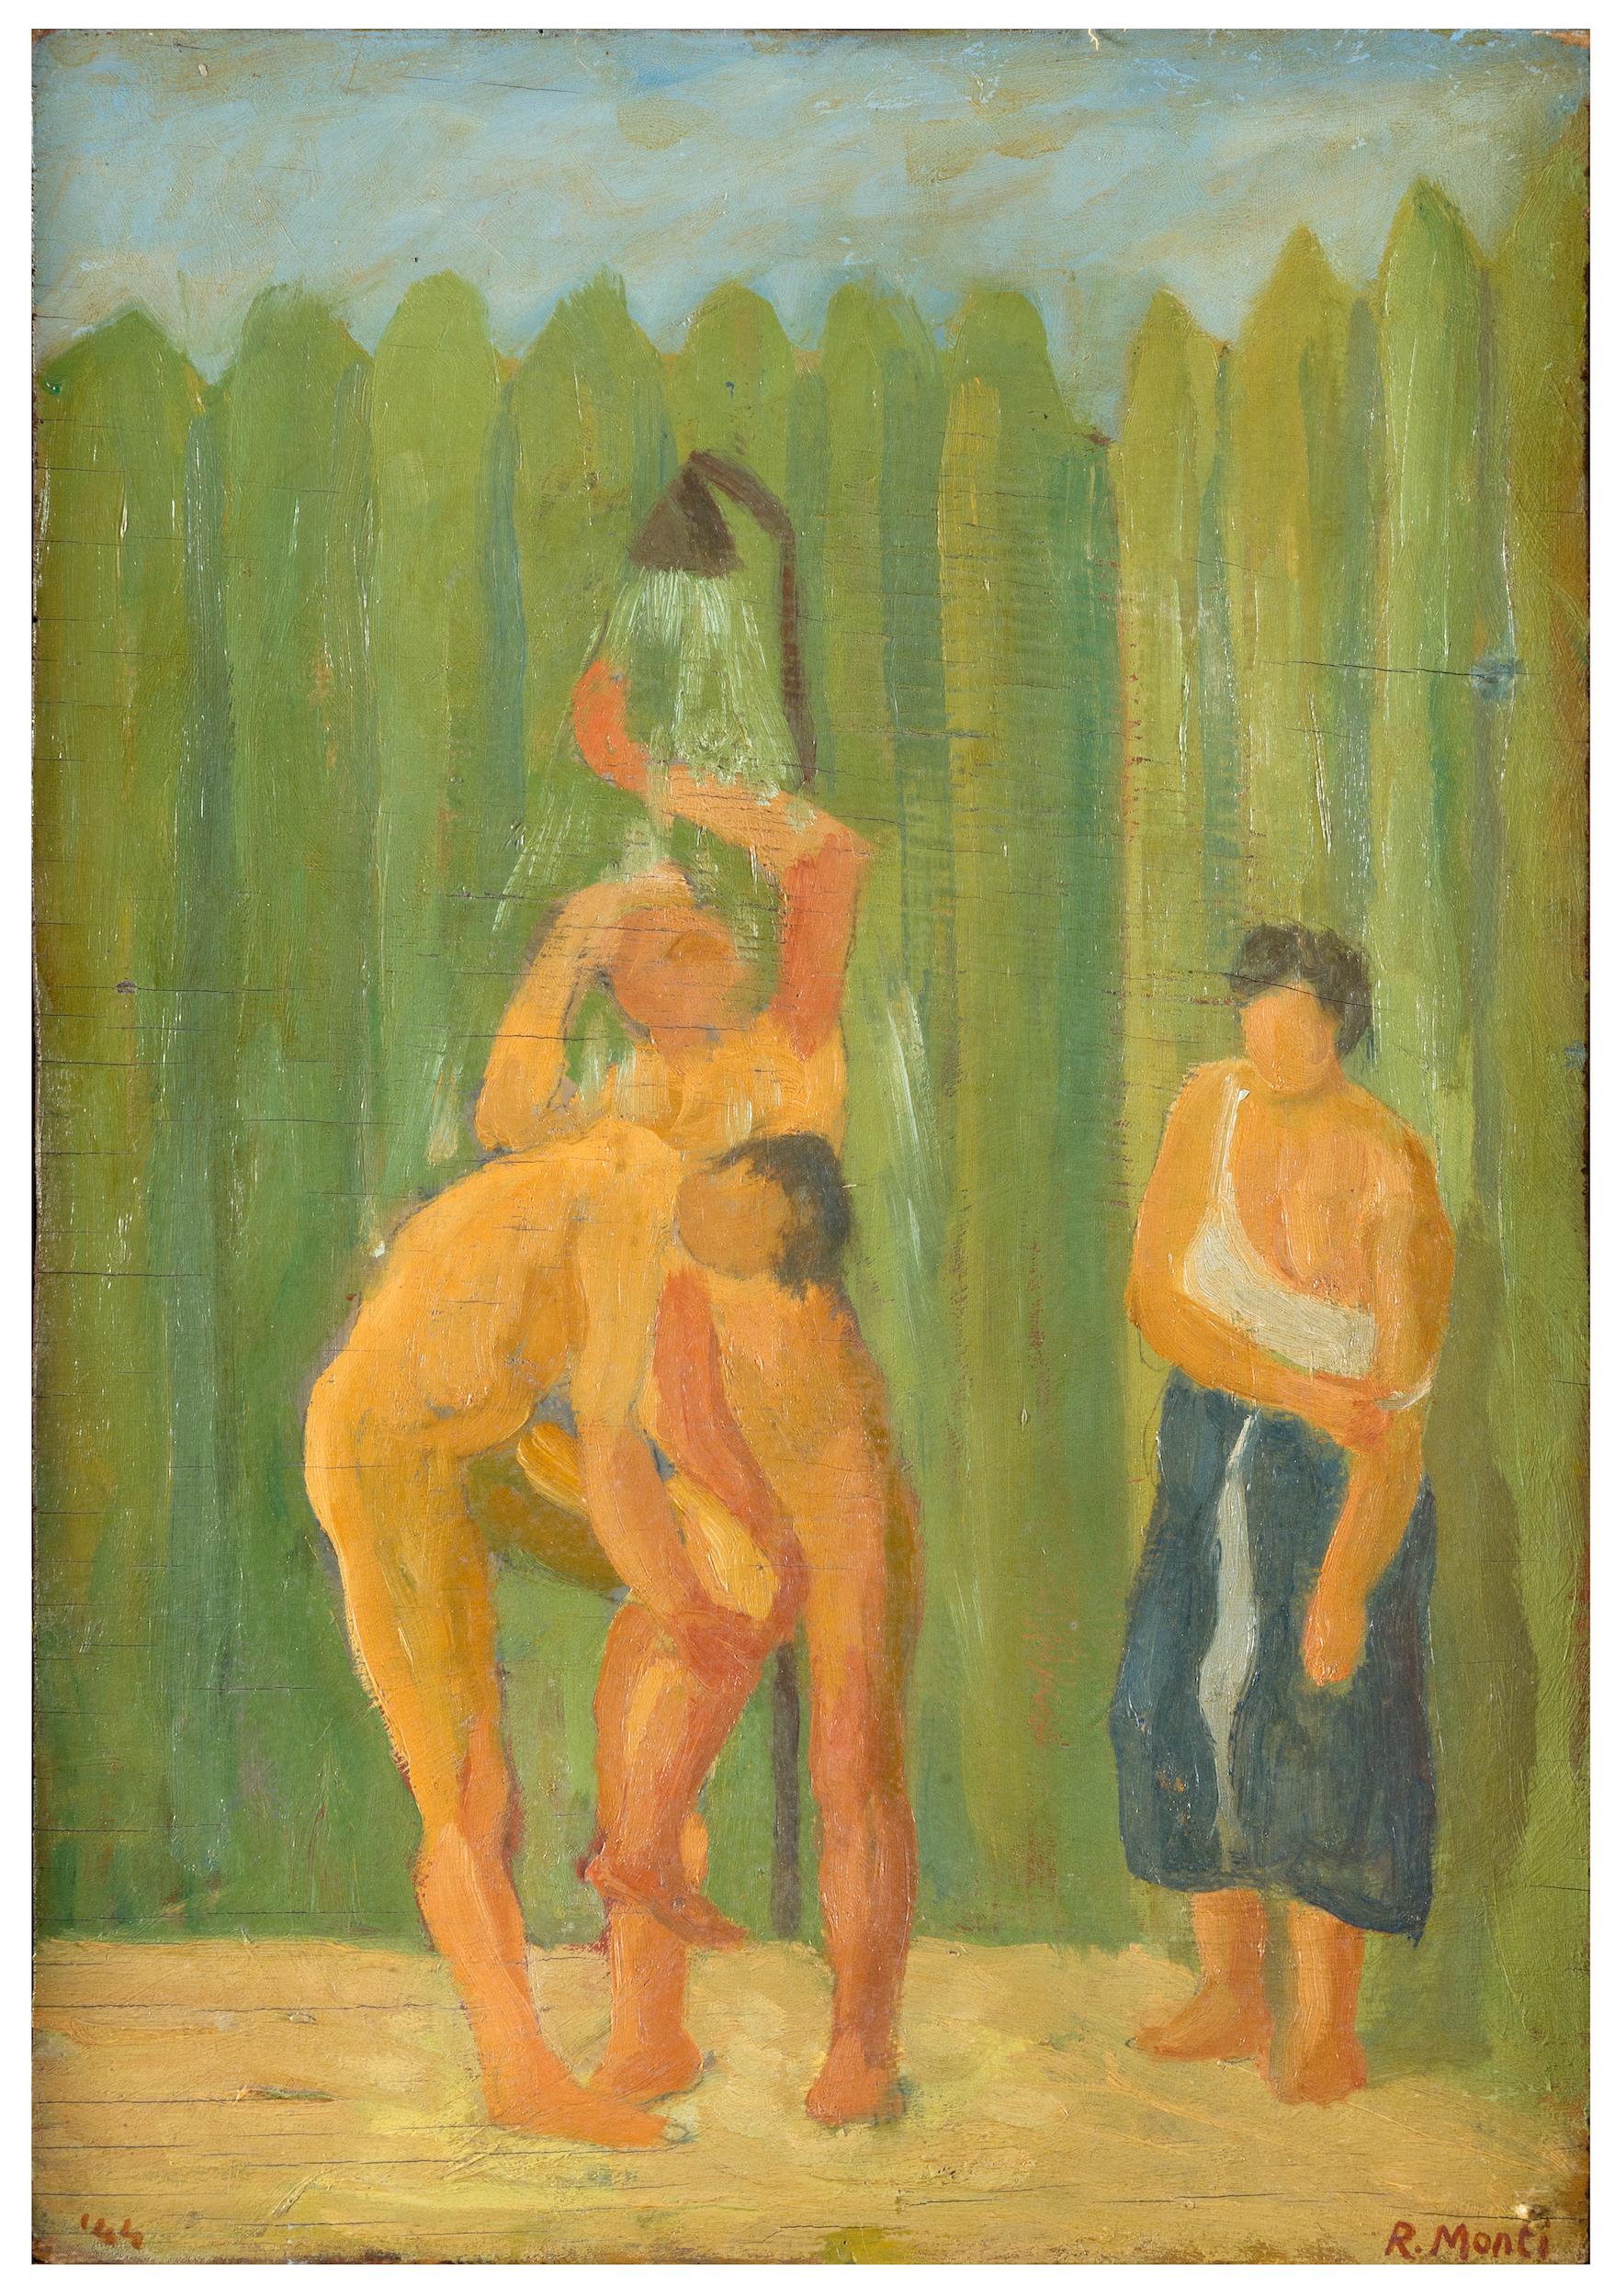 Rolando Monti Figurative Painting - La Doccia (The Shower) - Oil on Wooden Panel by R. Monti - 1944